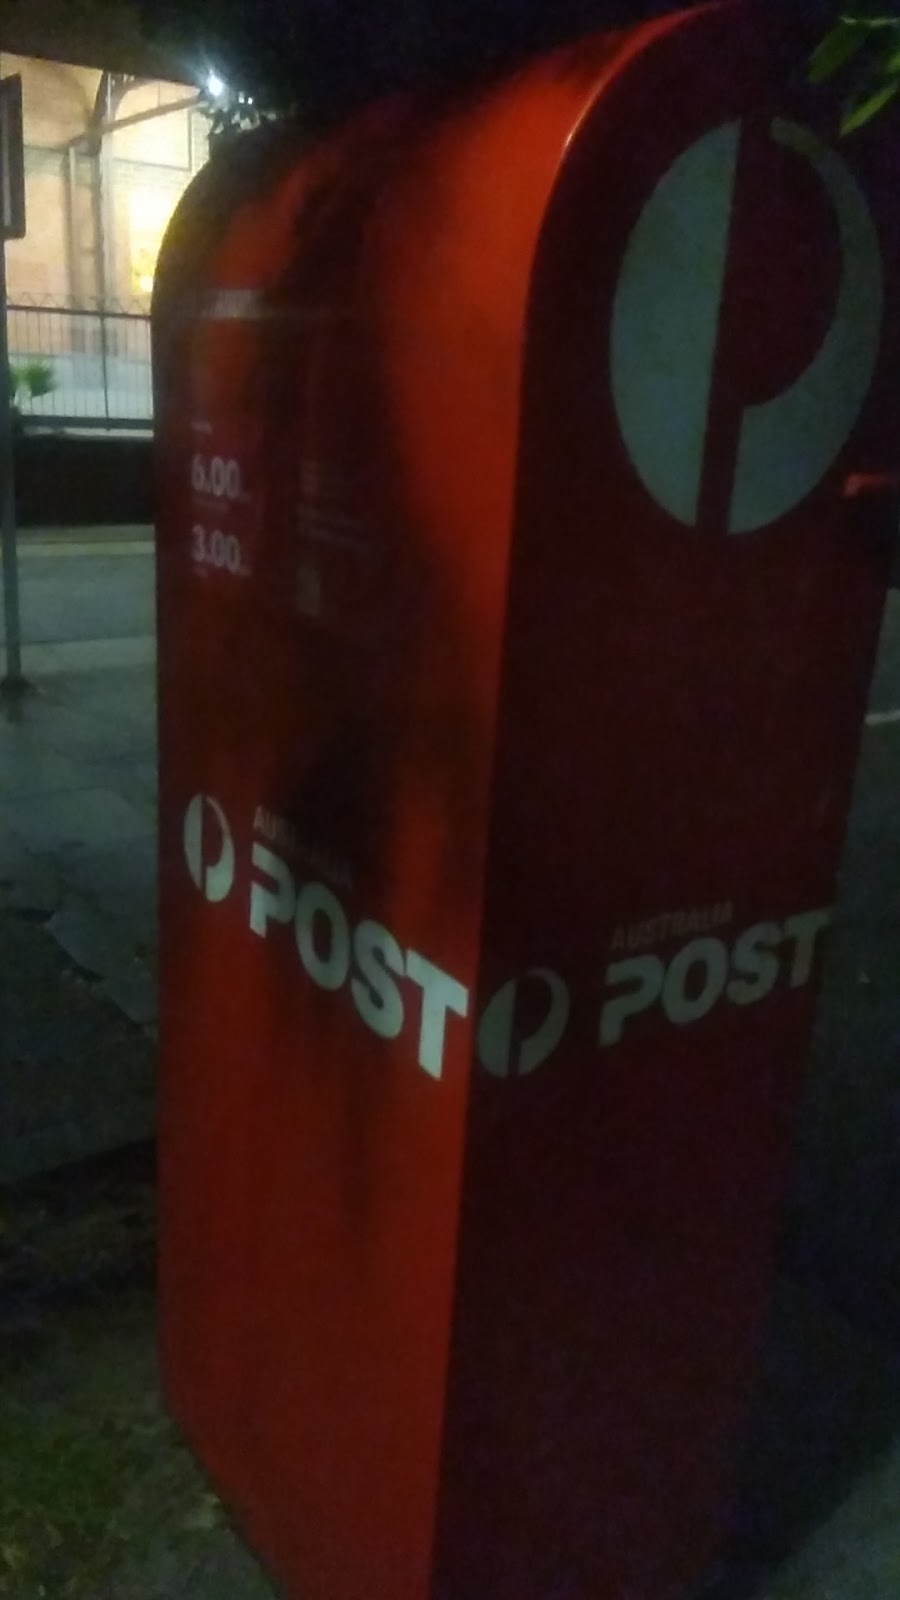 Australia post drop box | post office | 101 Beach St, Port Melbourne VIC 3207, Australia